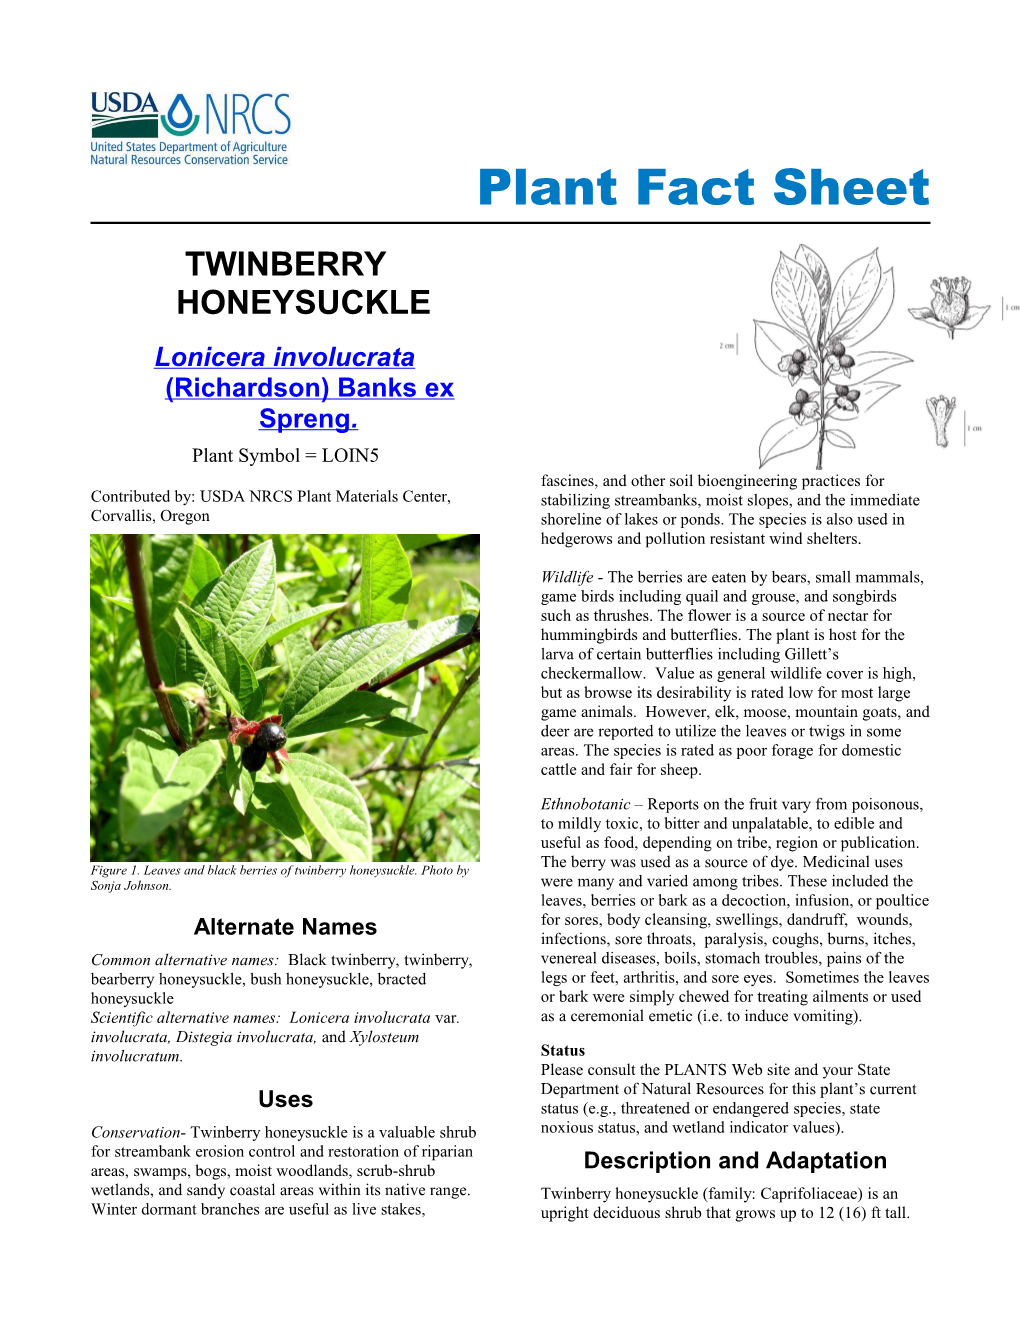 Plant Fact Sheet for Twinberry Honeysuckle (Lonicera Involucrata)